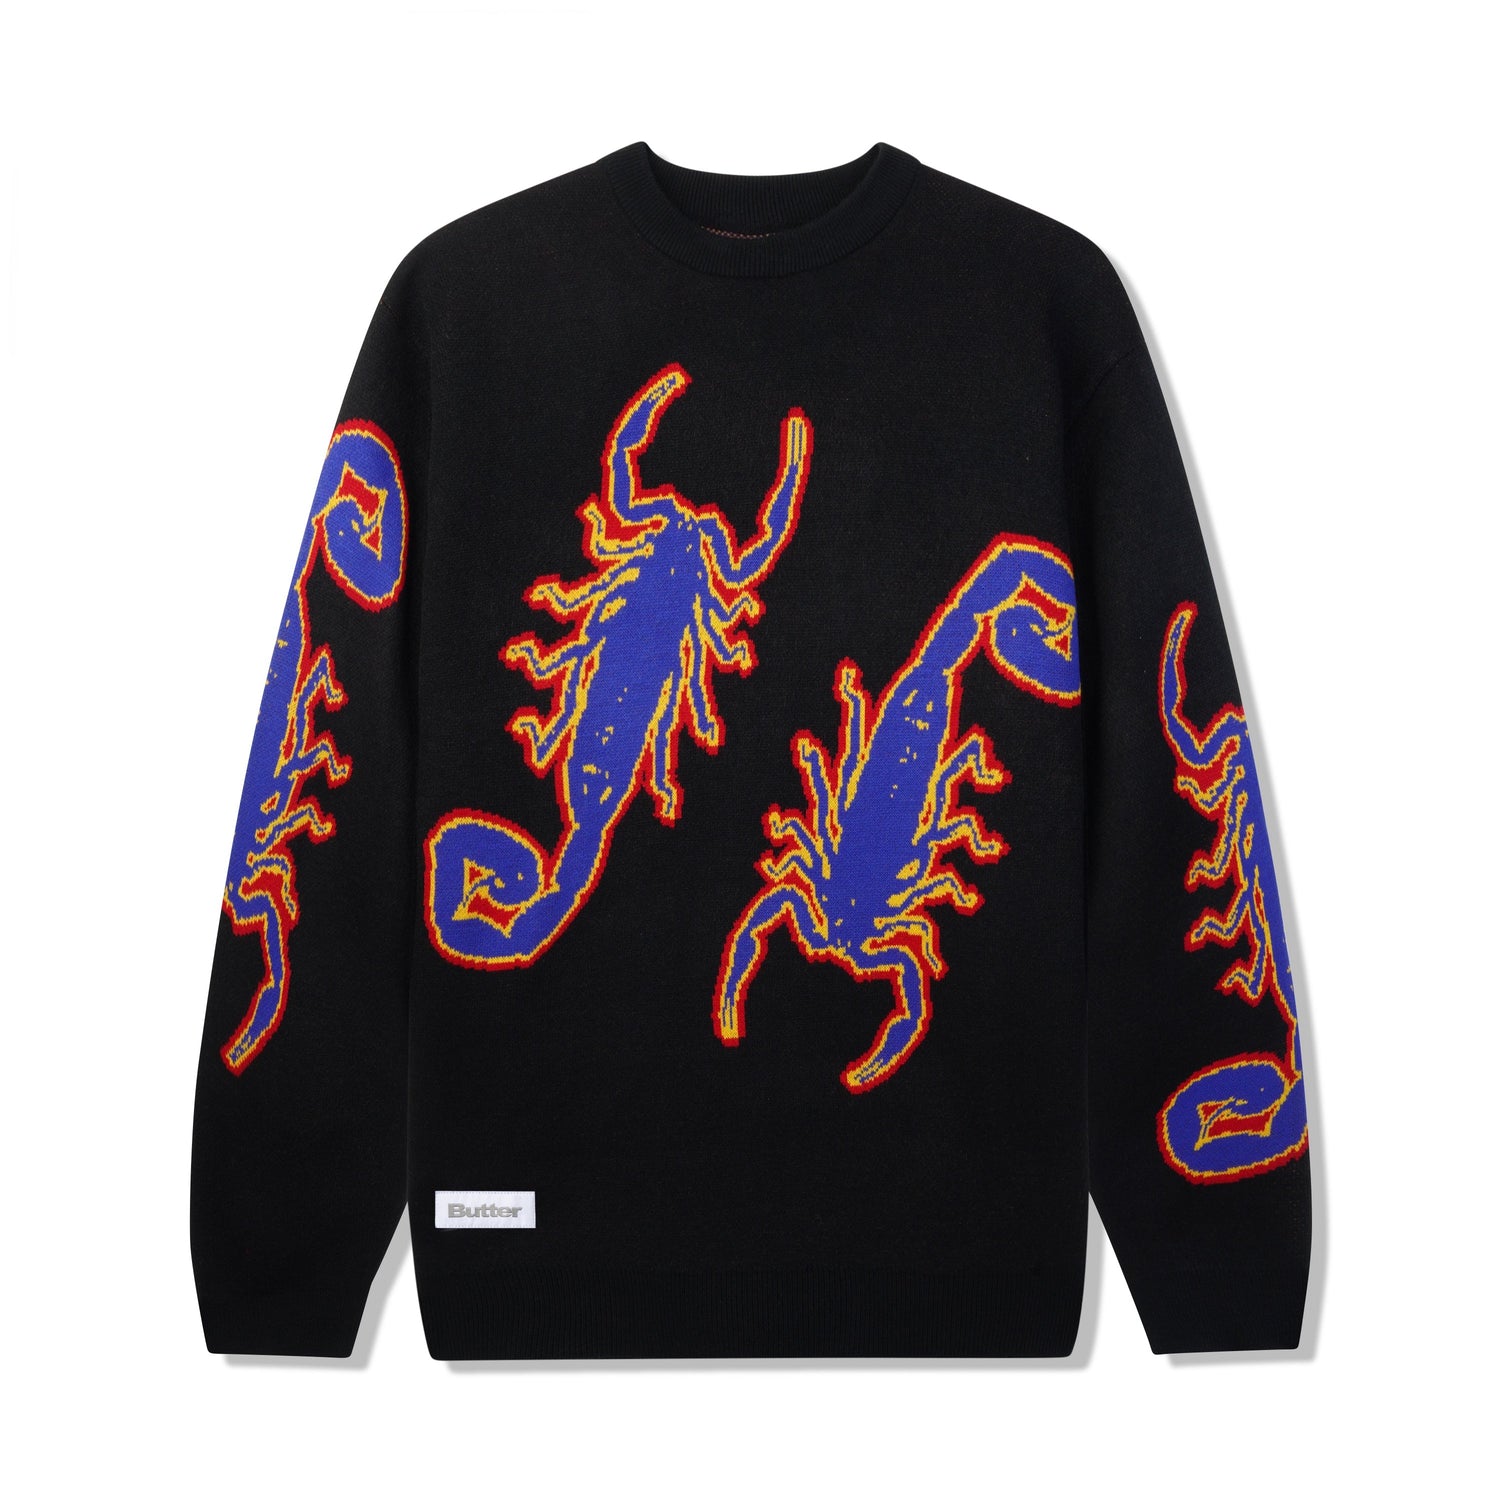 Scorpion Knitted Sweater, Black